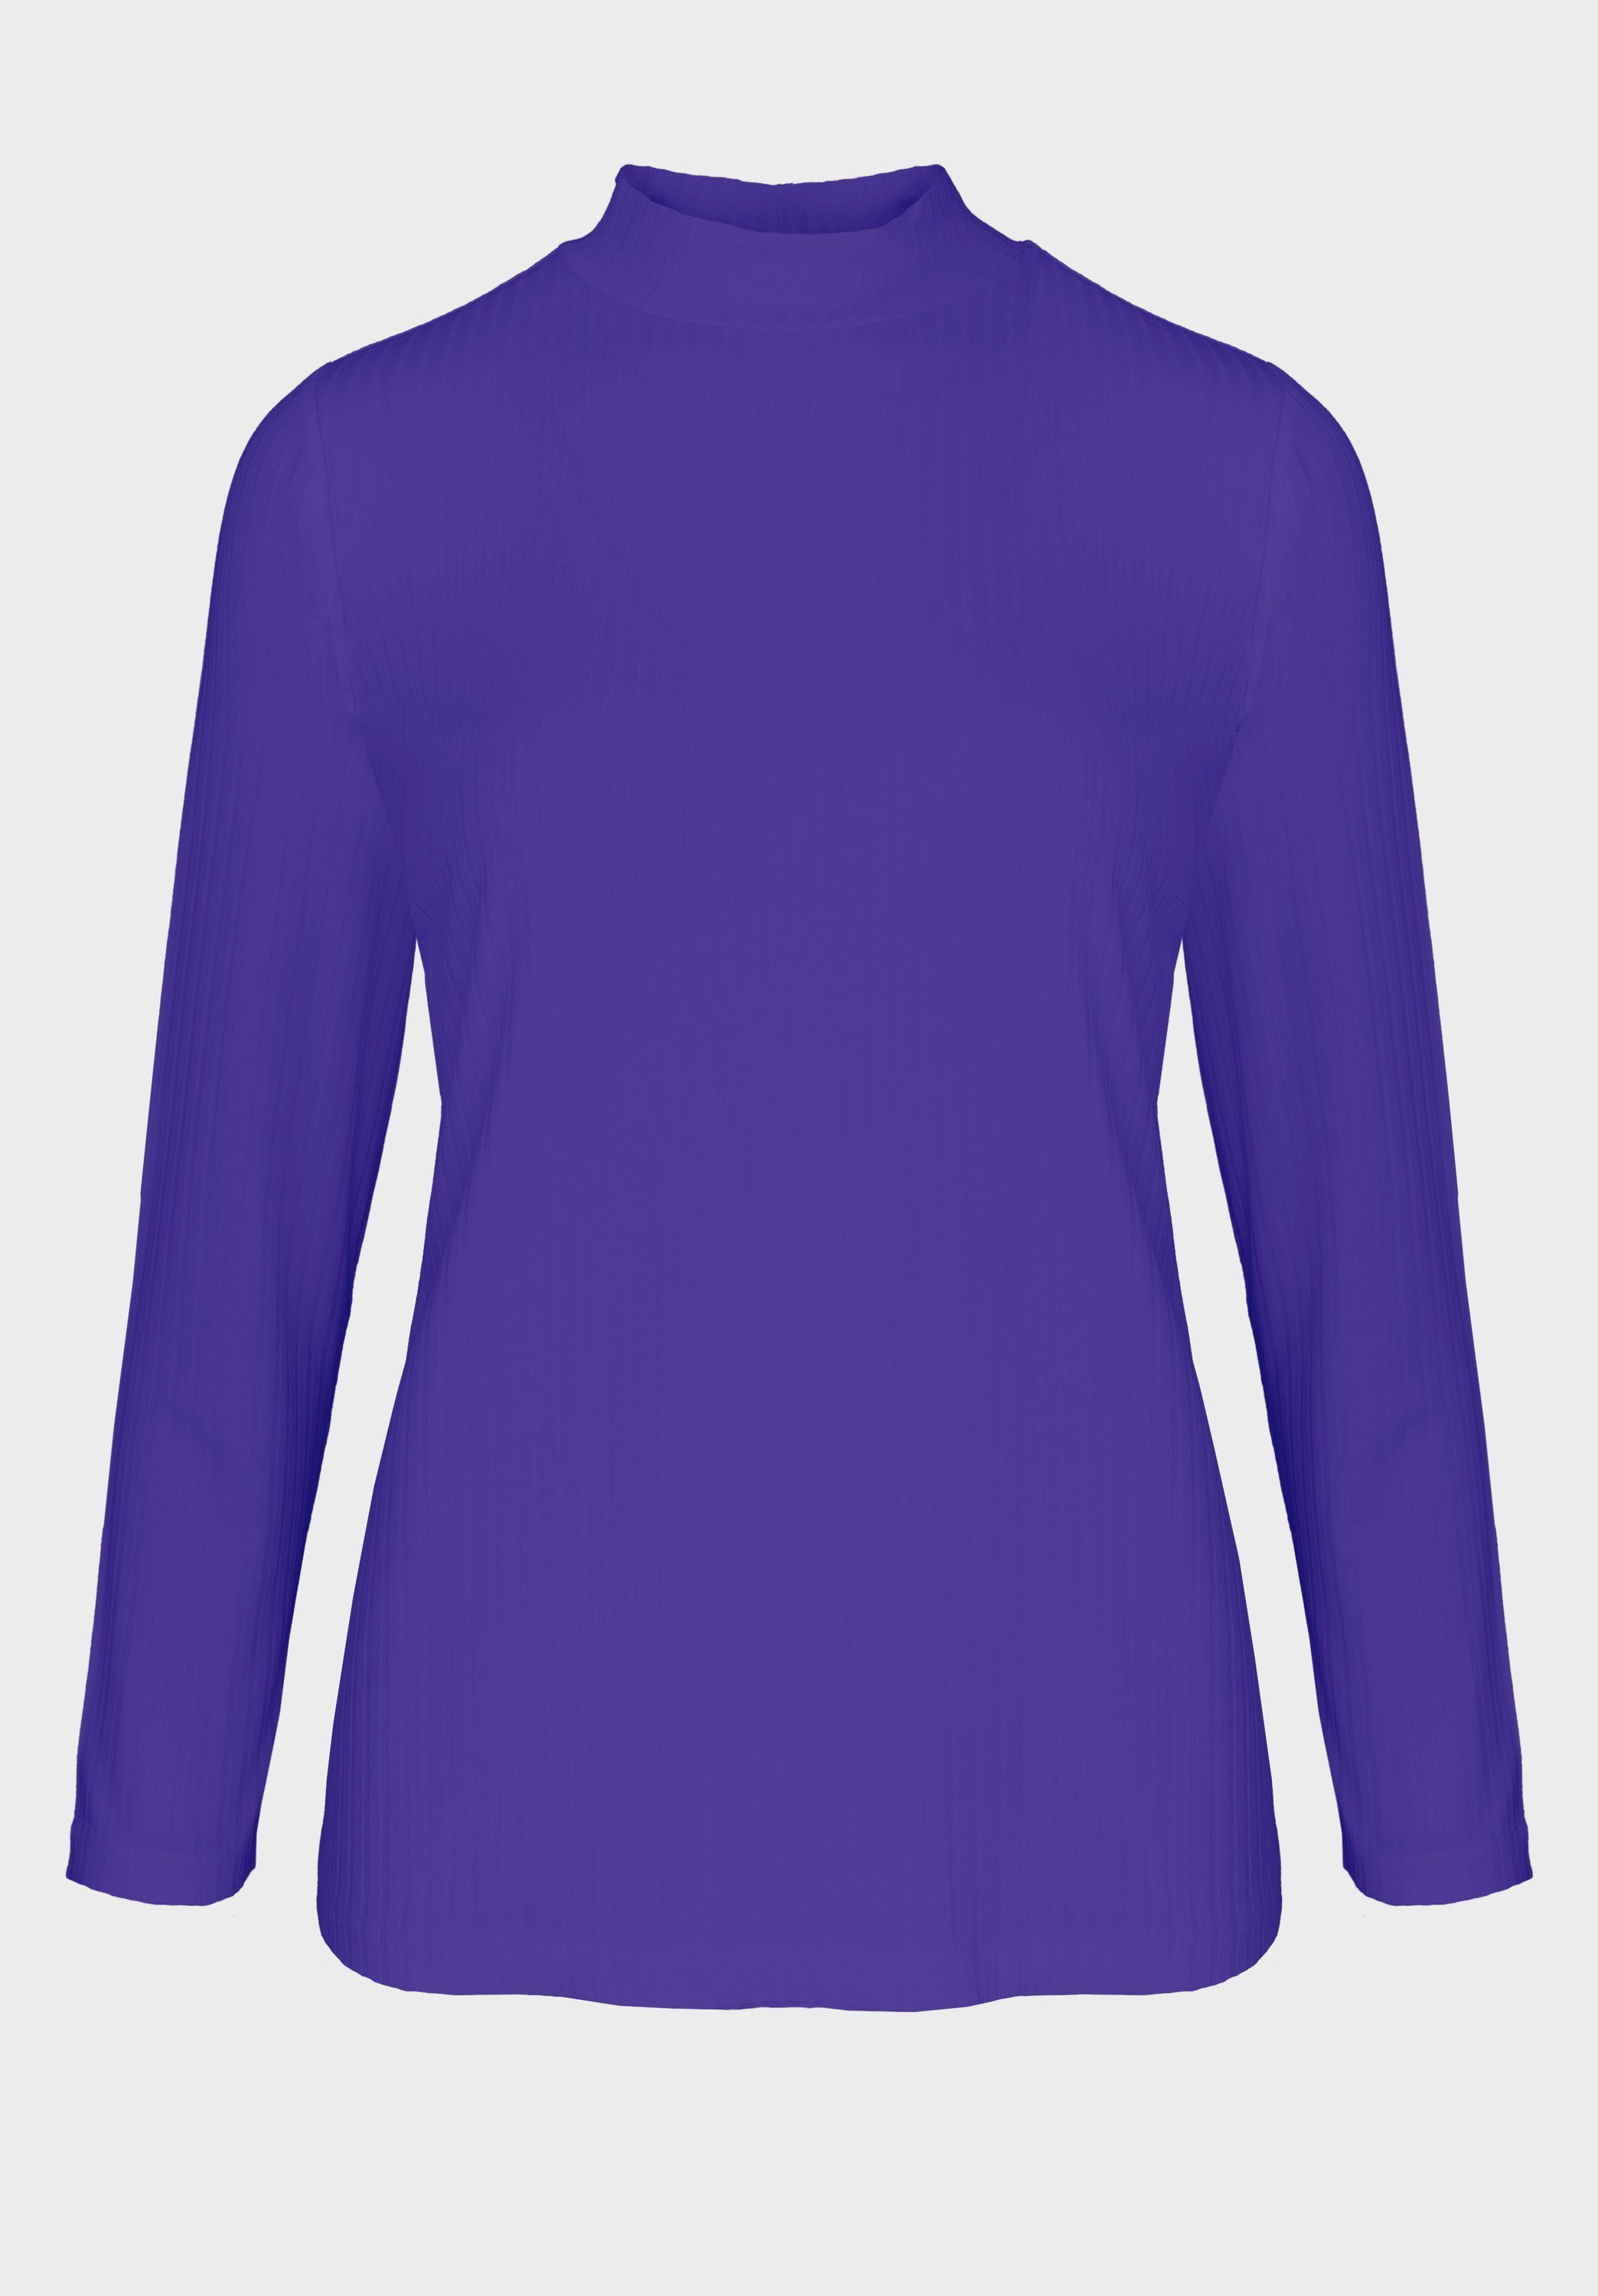 bianca Langarmshirt GRETA mit in modernem purple Trendfarben Turtle-Neck coolen